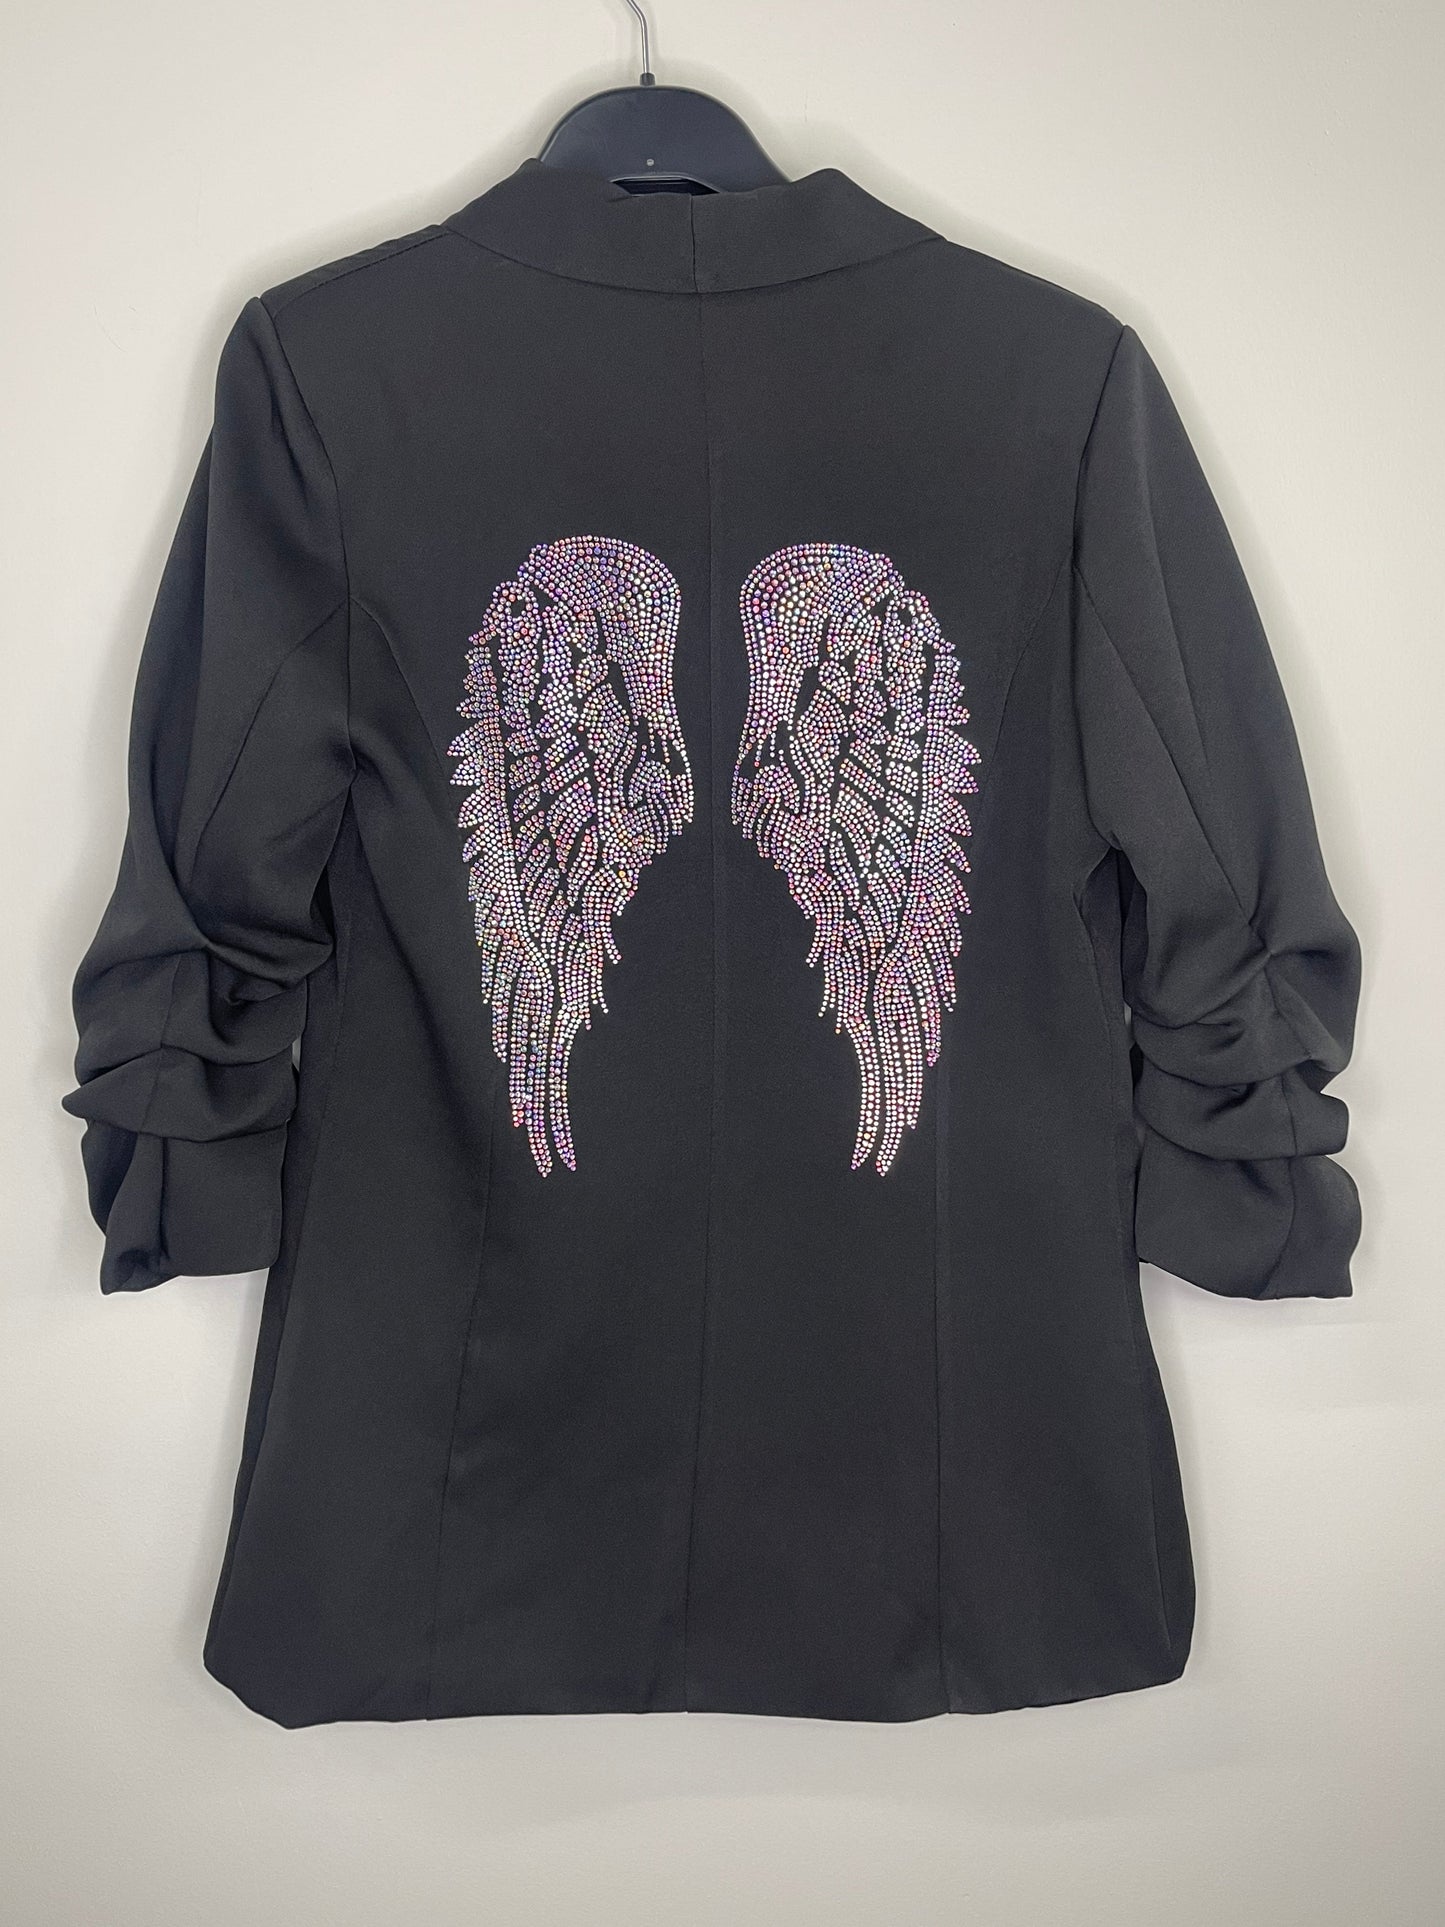 Blazer, Ruched Black, Crystal Silver Angel Wings